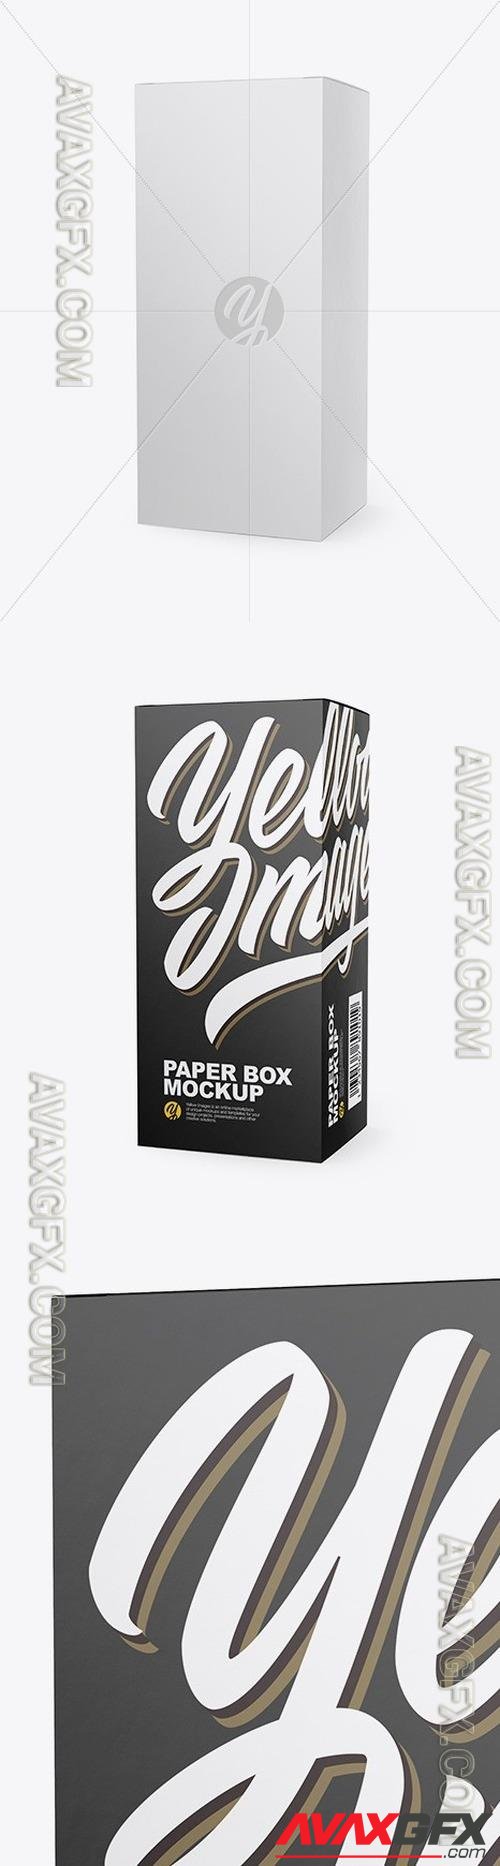 Paper Box Mockup - Half Side View 49950 TIF